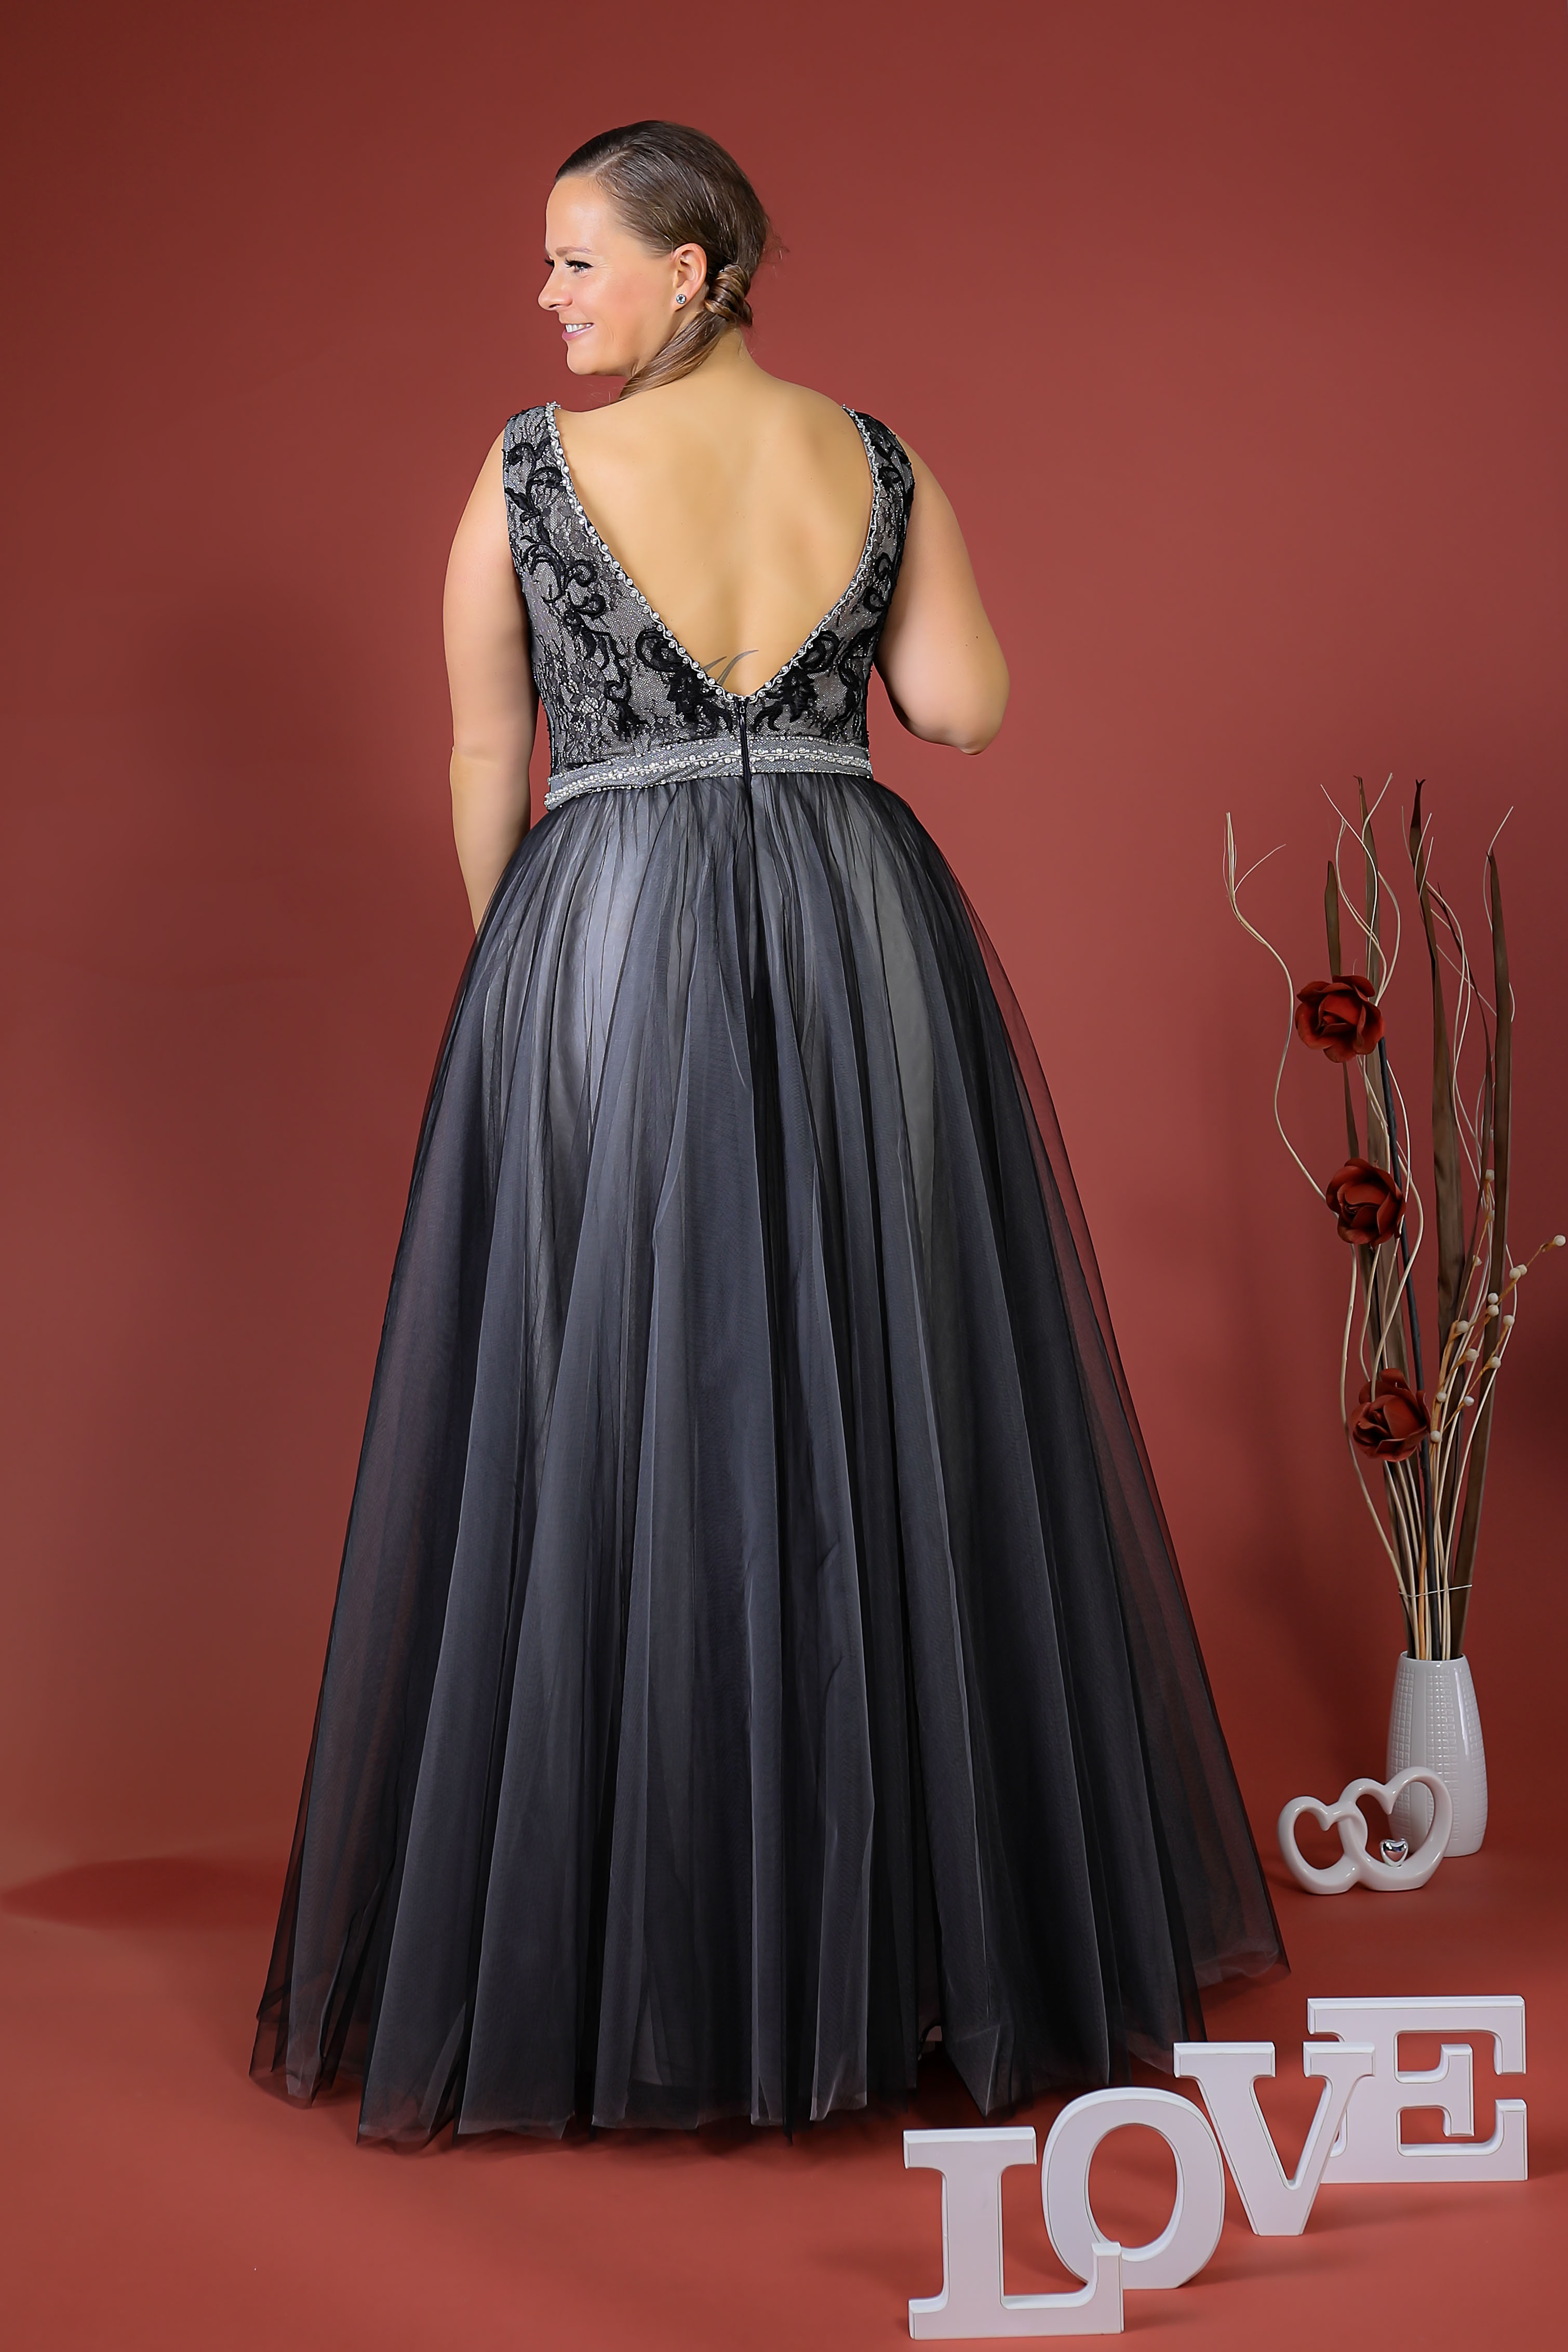 Schantal Brautkleid aus der Kollektion „Pilar XXL“, Modell 52018. Foto 5